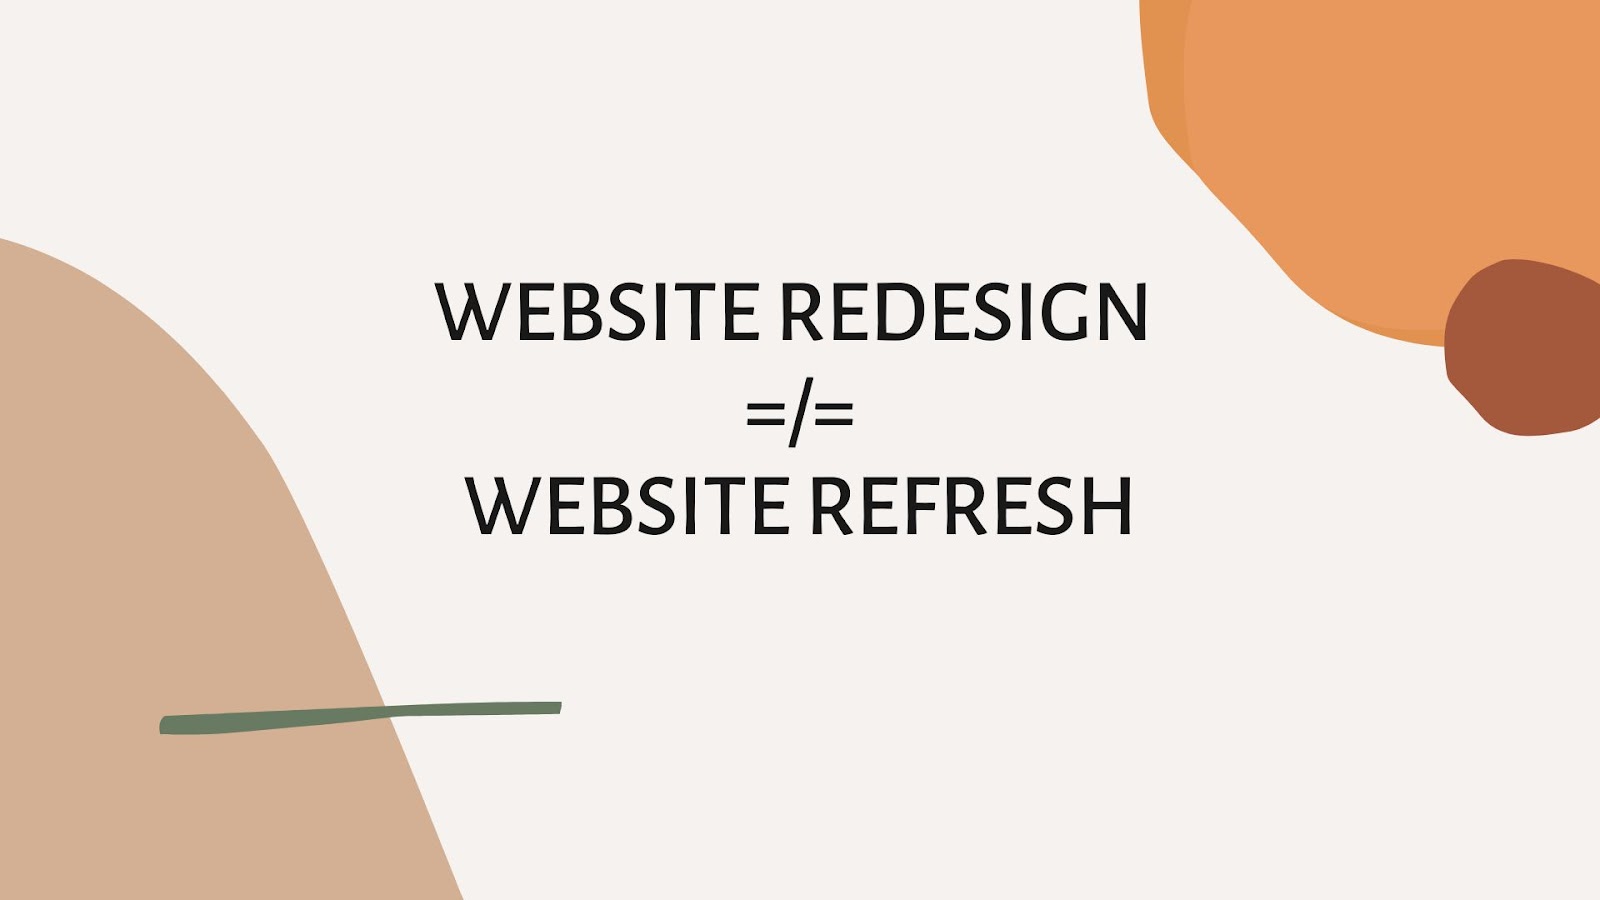 website redesign vs website refresh